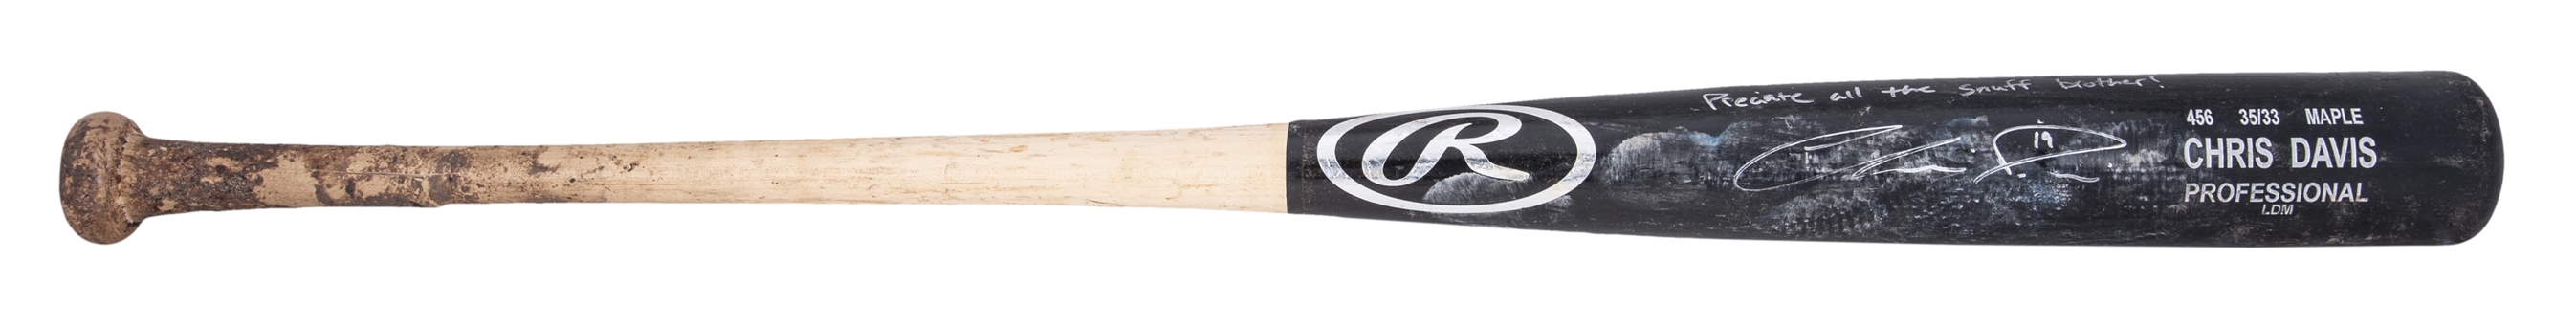 2015 Chris Davis Game Used Rawlings 456 Model Bat (PSA/DNA)